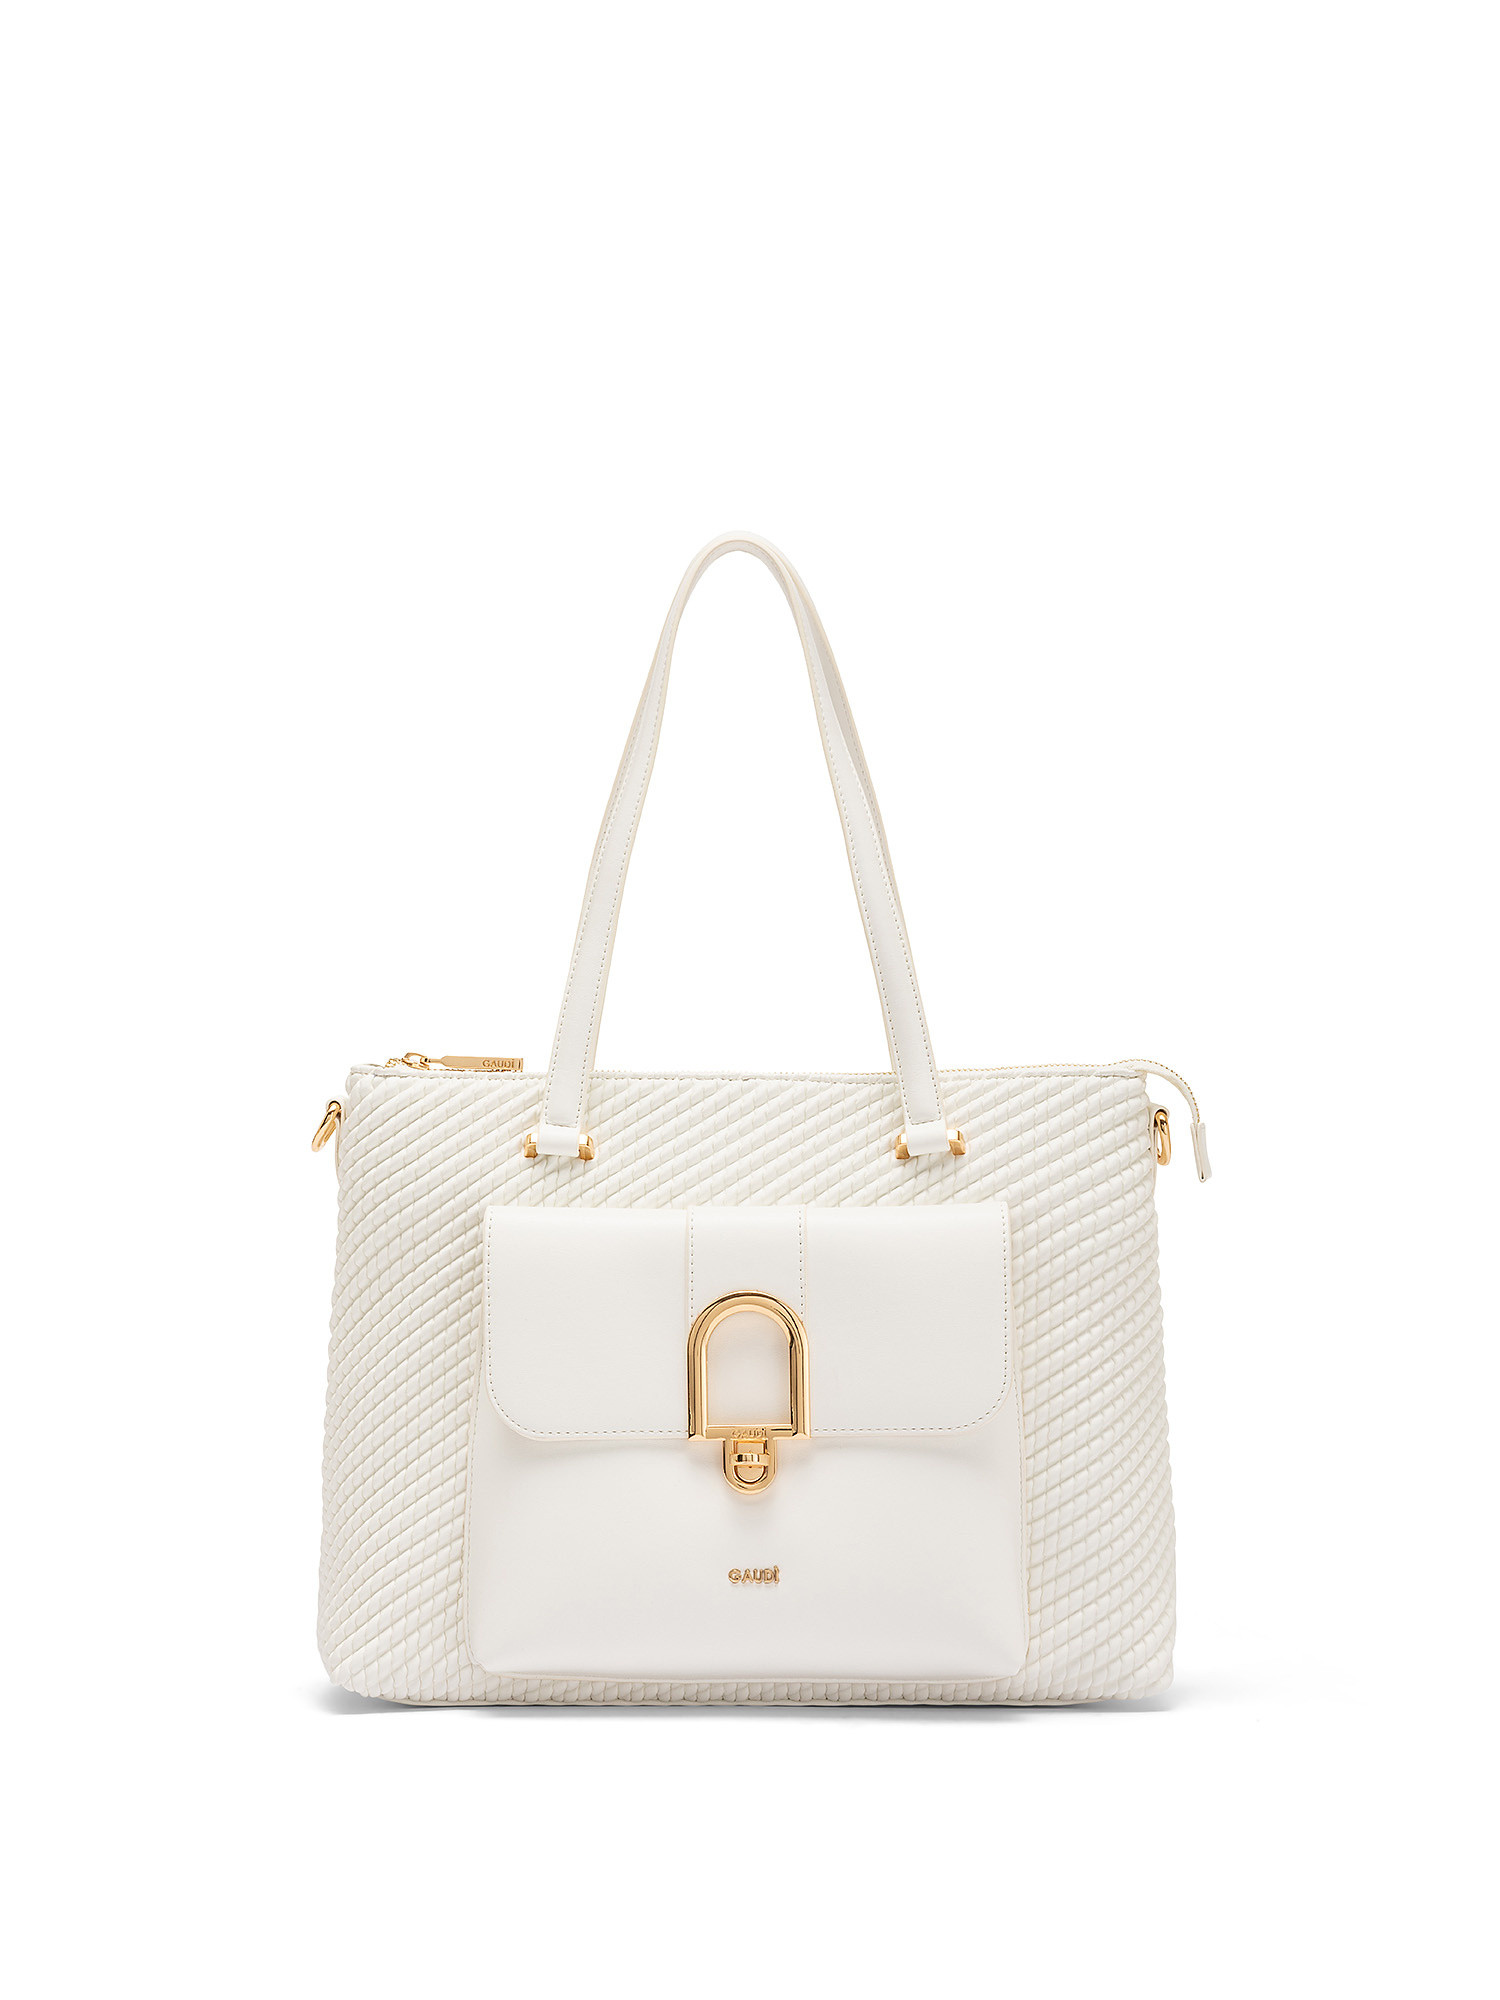 Thalissa shopping bag, White, large image number 0